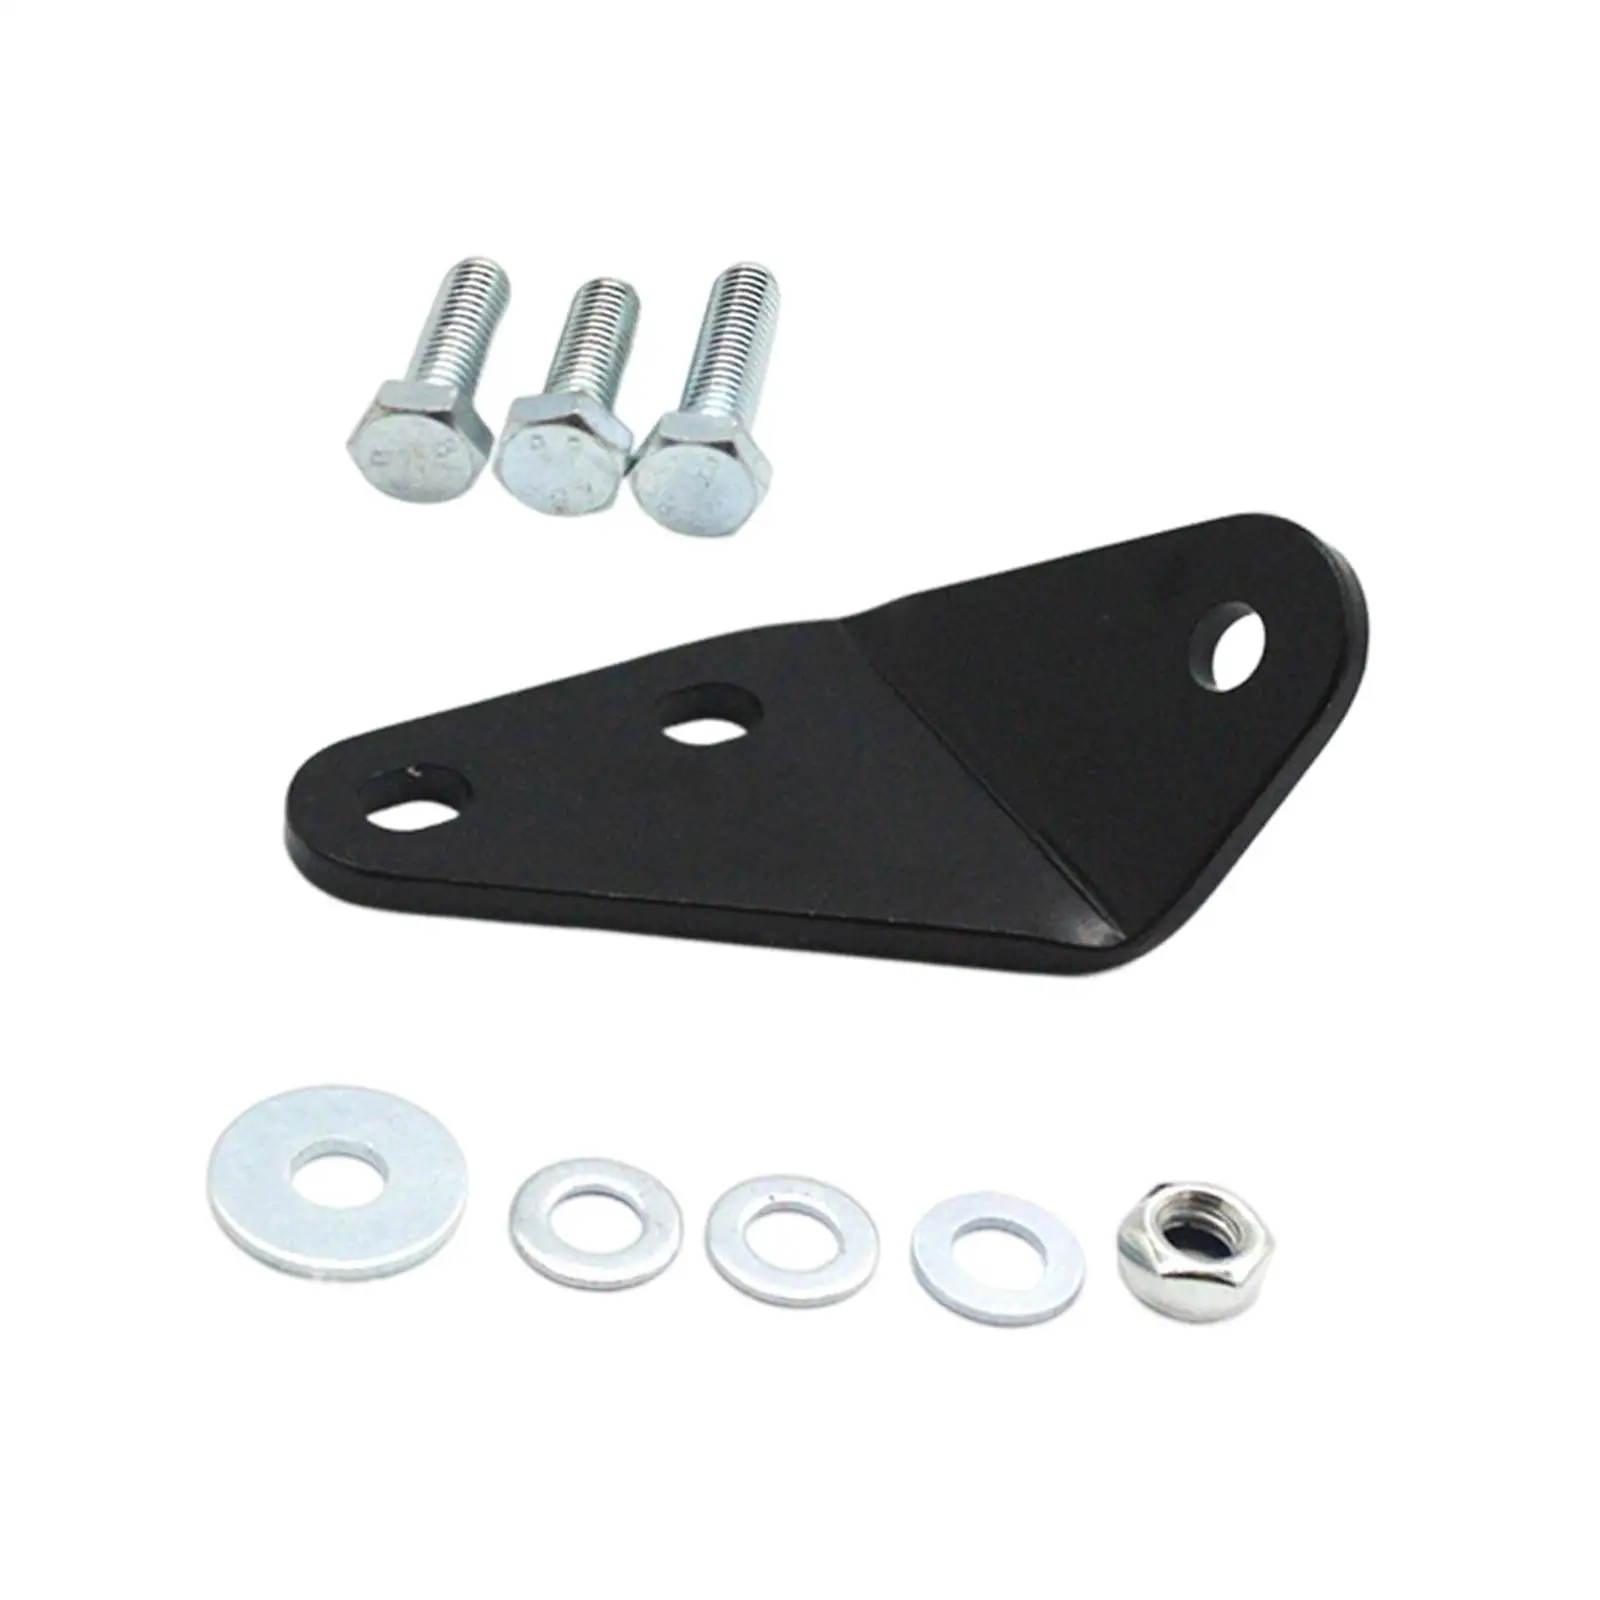 Clutch Pedal Repair Bracket Set Metal Replace Parts High Performance for VW T4 Transporter Caravelle Automotive Accessories